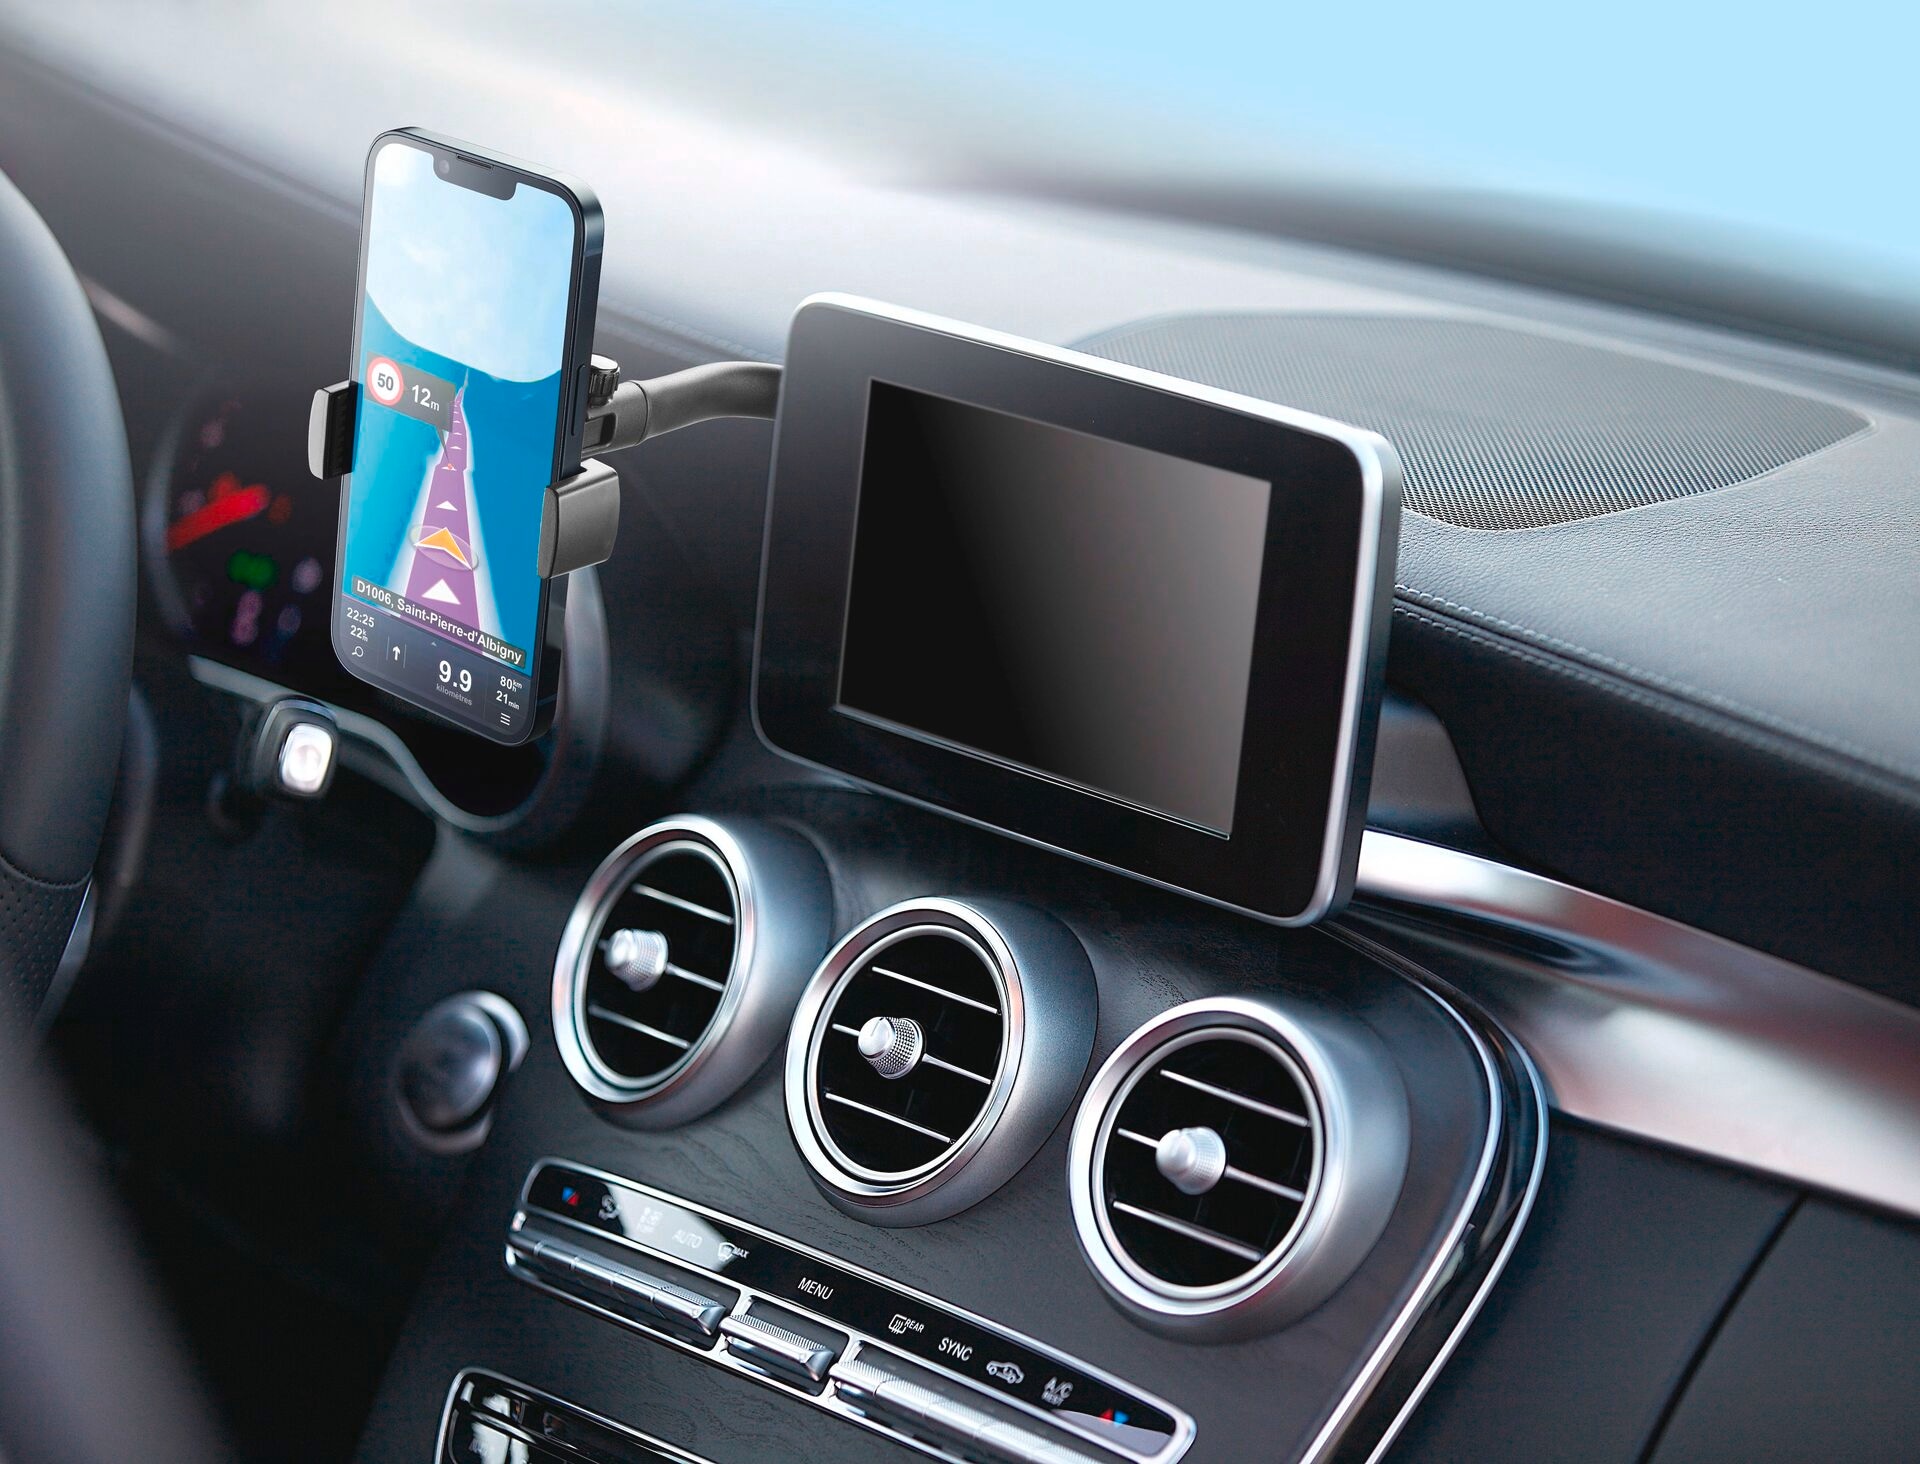 Cellularline Handy-Halterung »Spin Display Car Holder«, zur Befestigung am Fahrzeugdisplay, 360 Grad drehbar